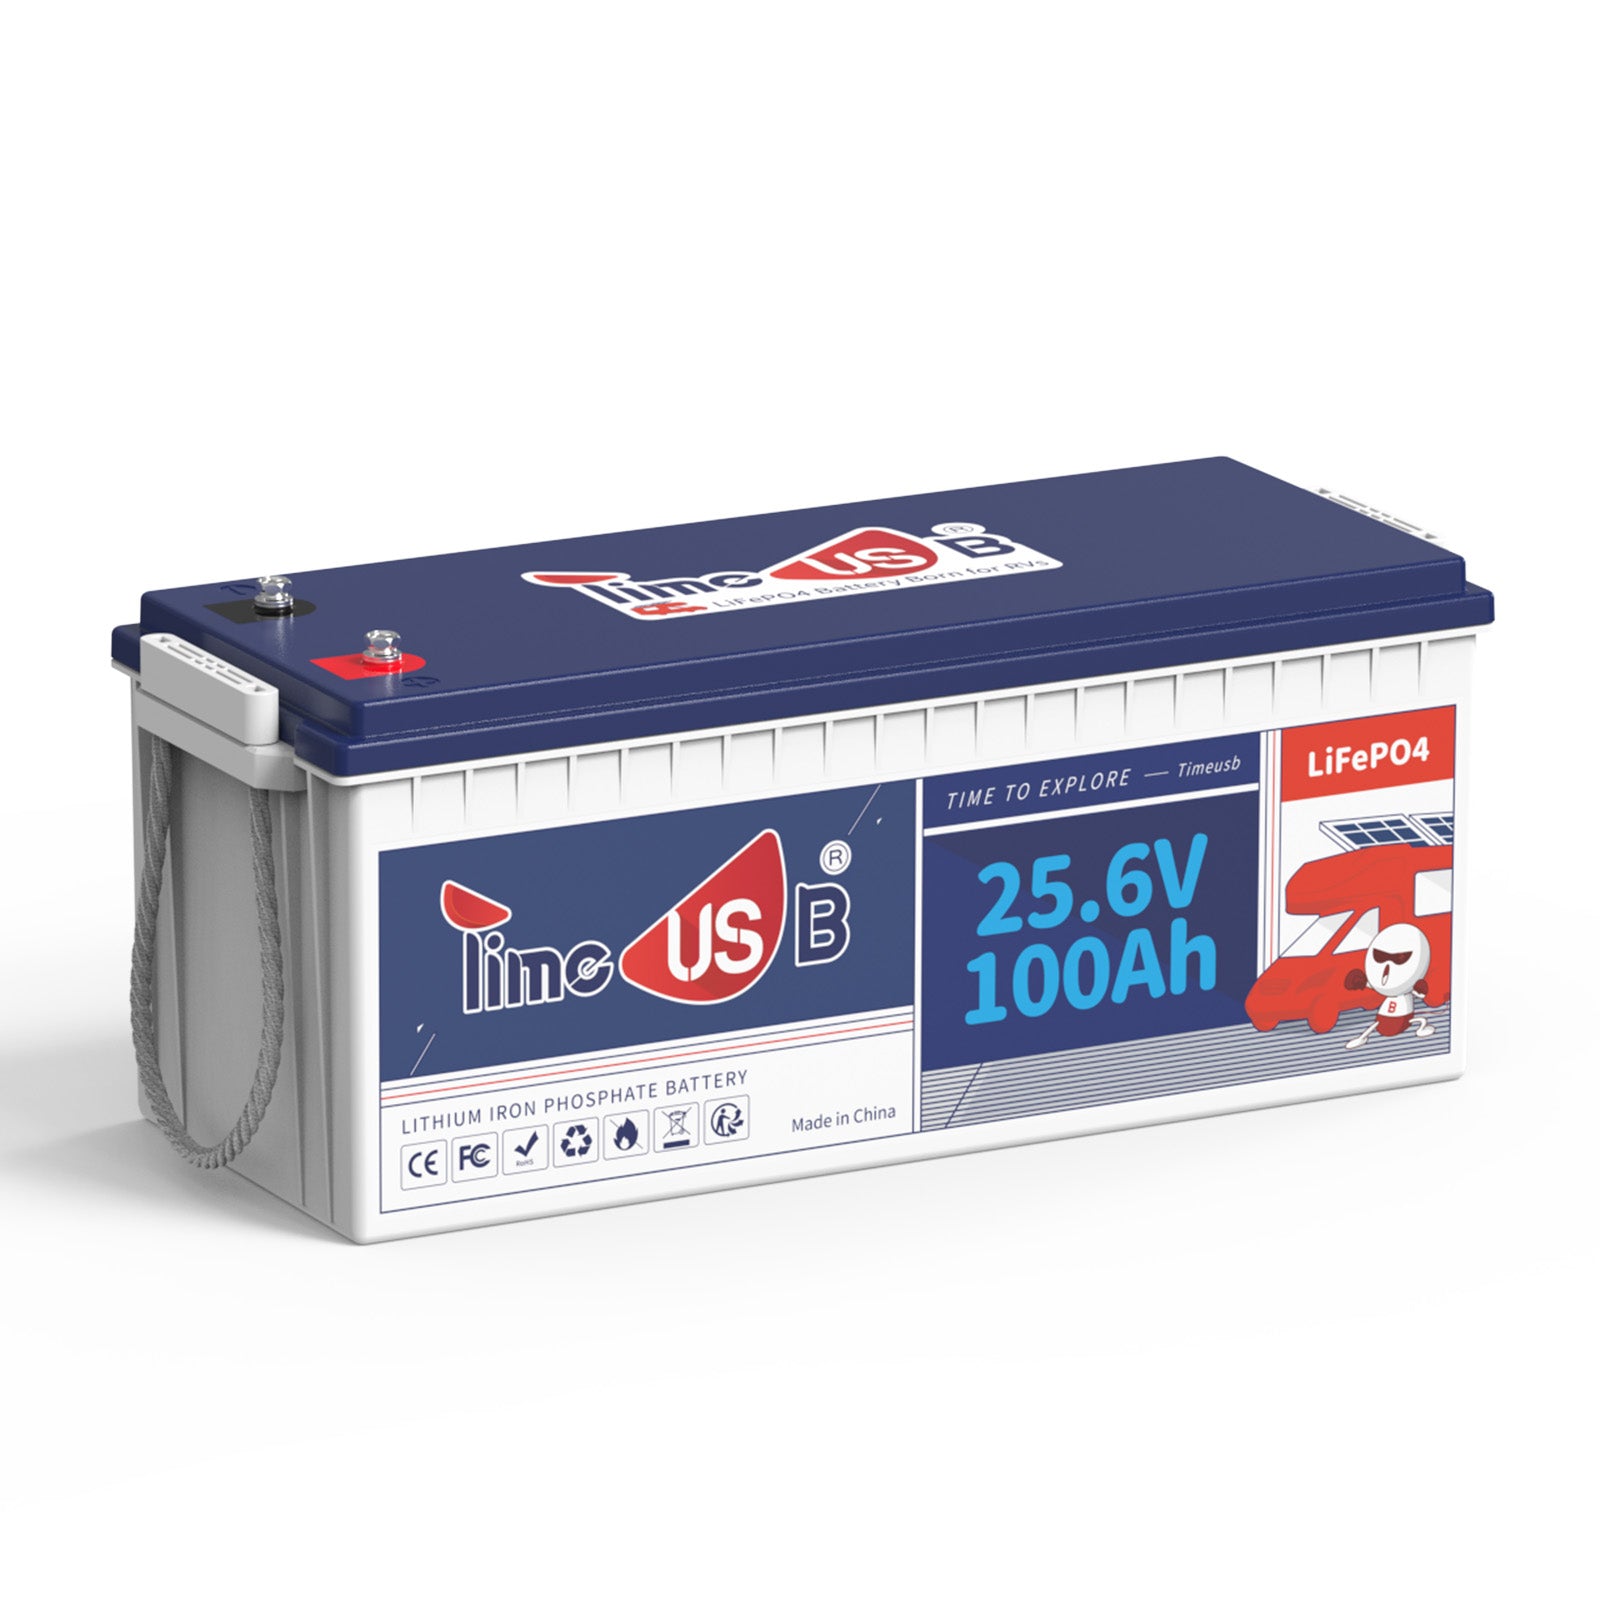 Timeusb Lithium Batterie 100Ah 24V LiFePO4